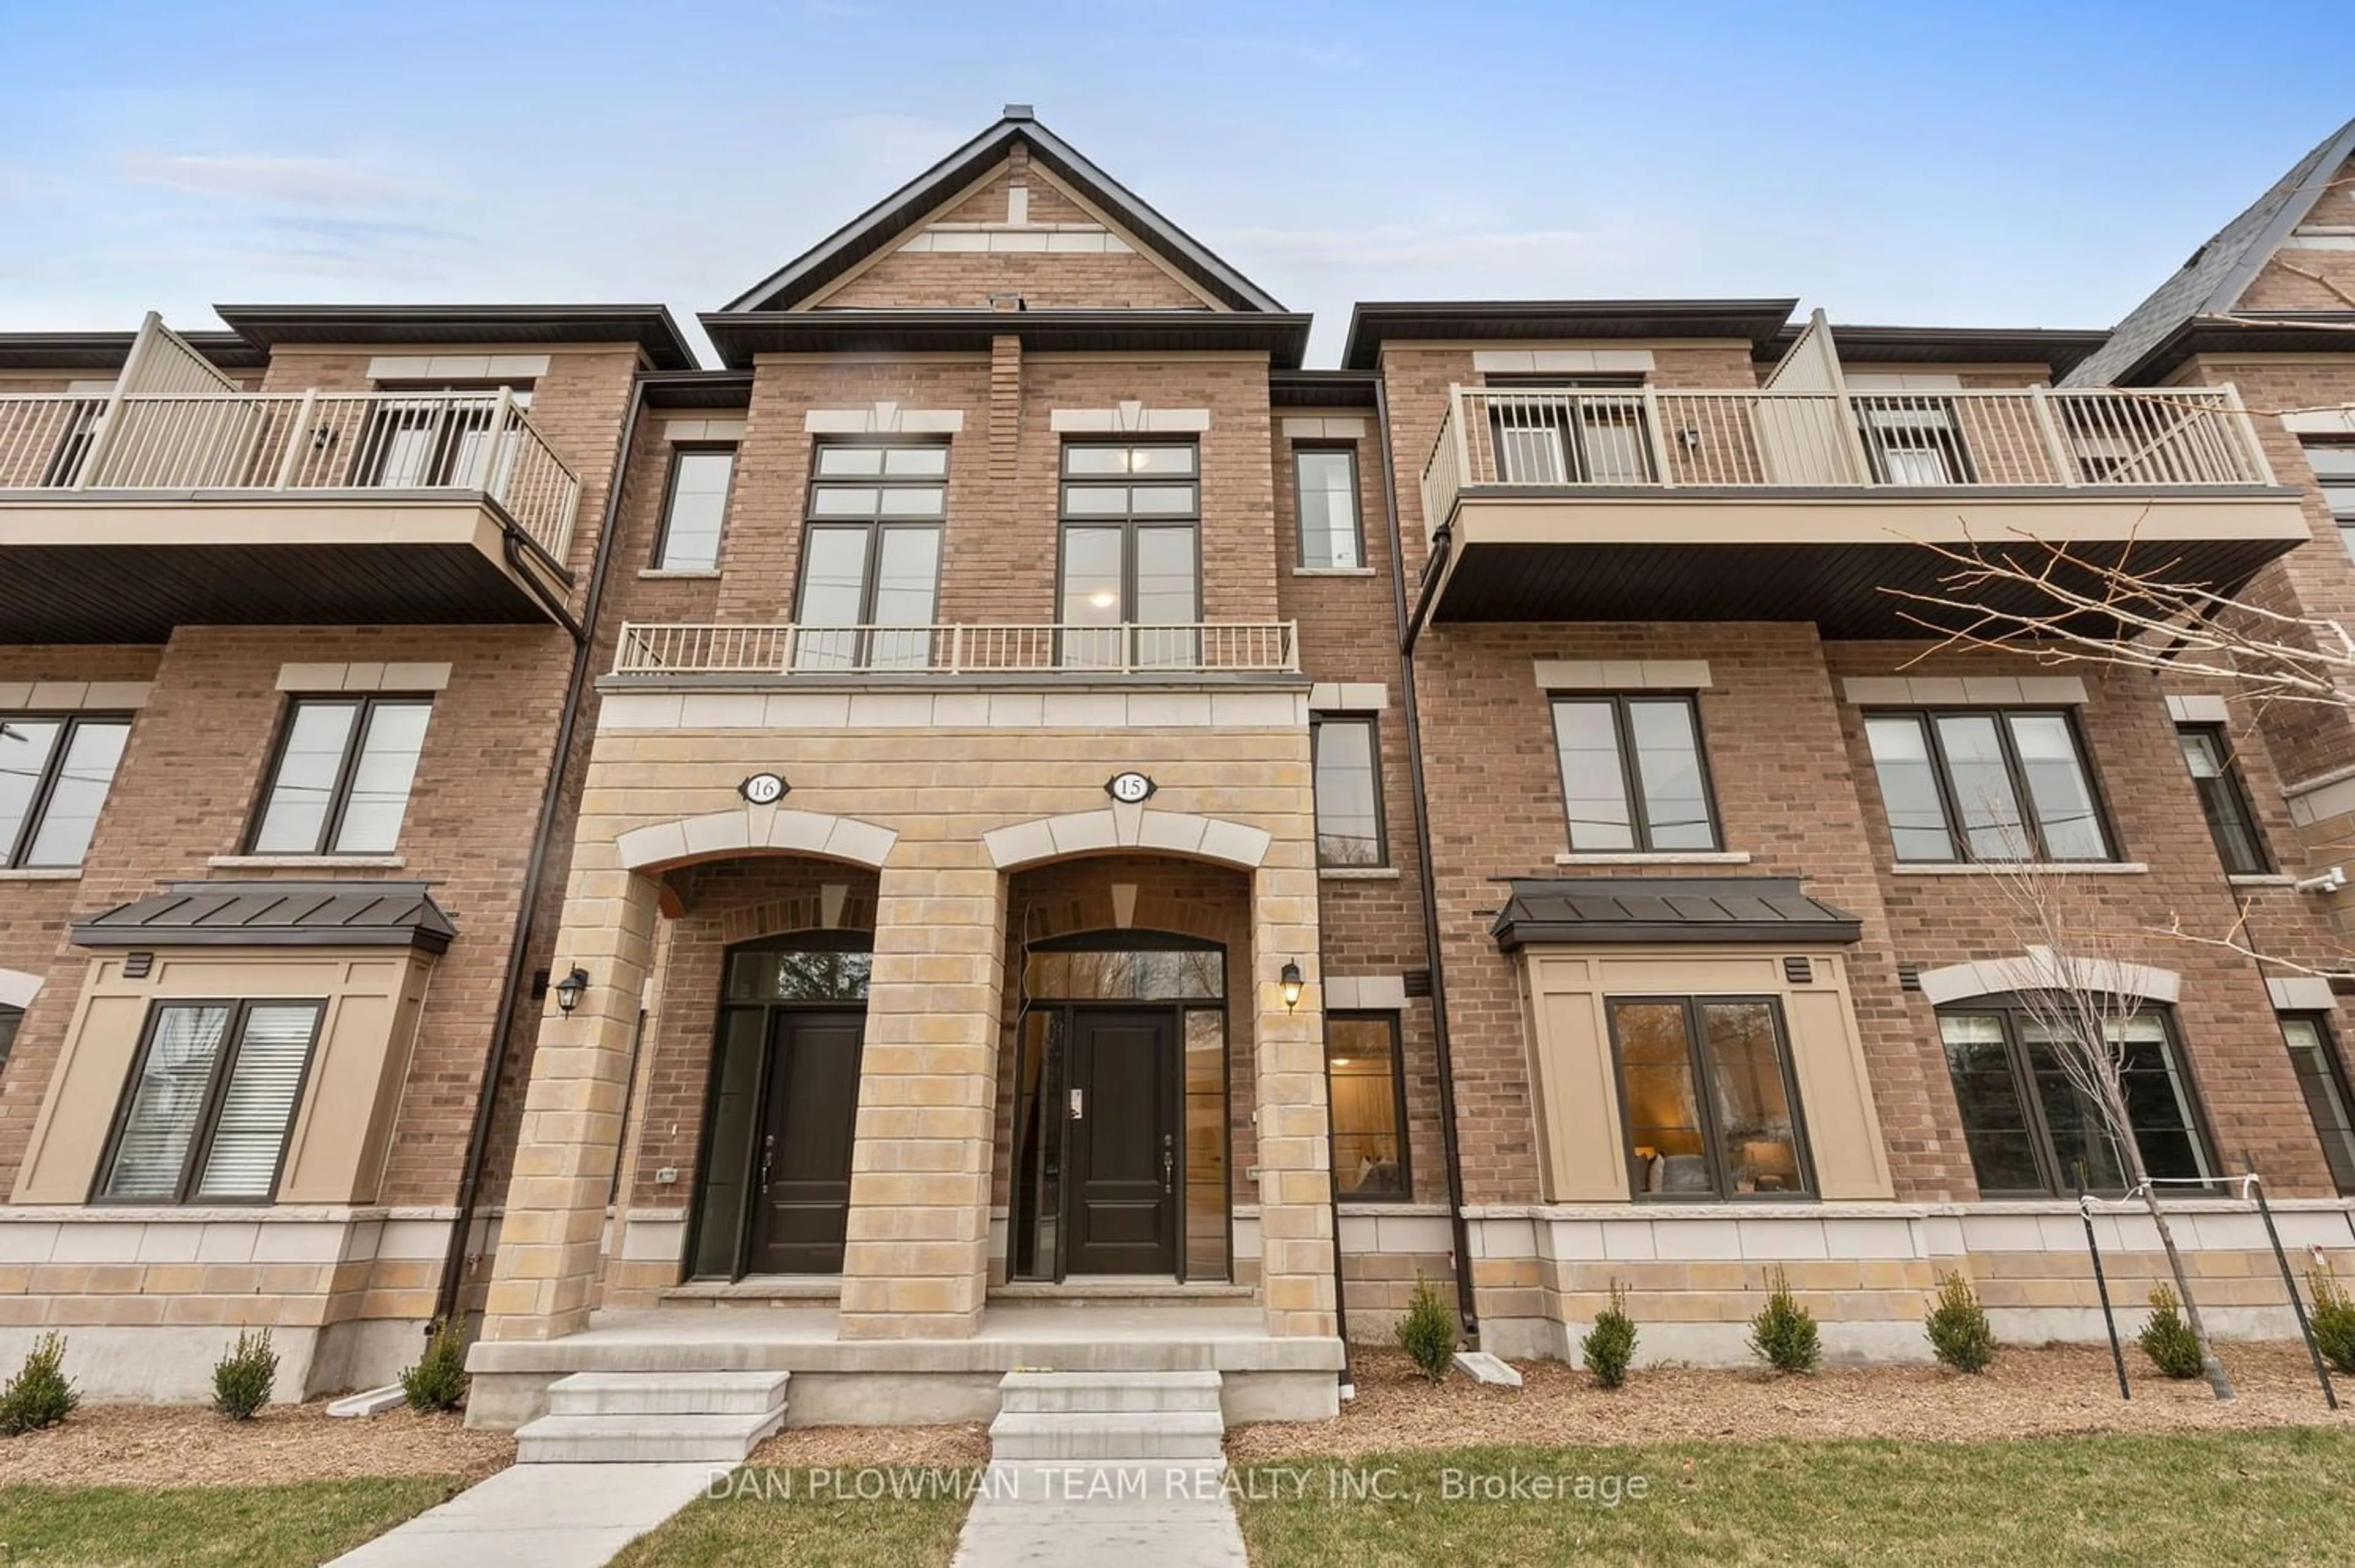 Home with brick exterior material for 1480 Altona Rd #15, Pickering Ontario L1V 1M3